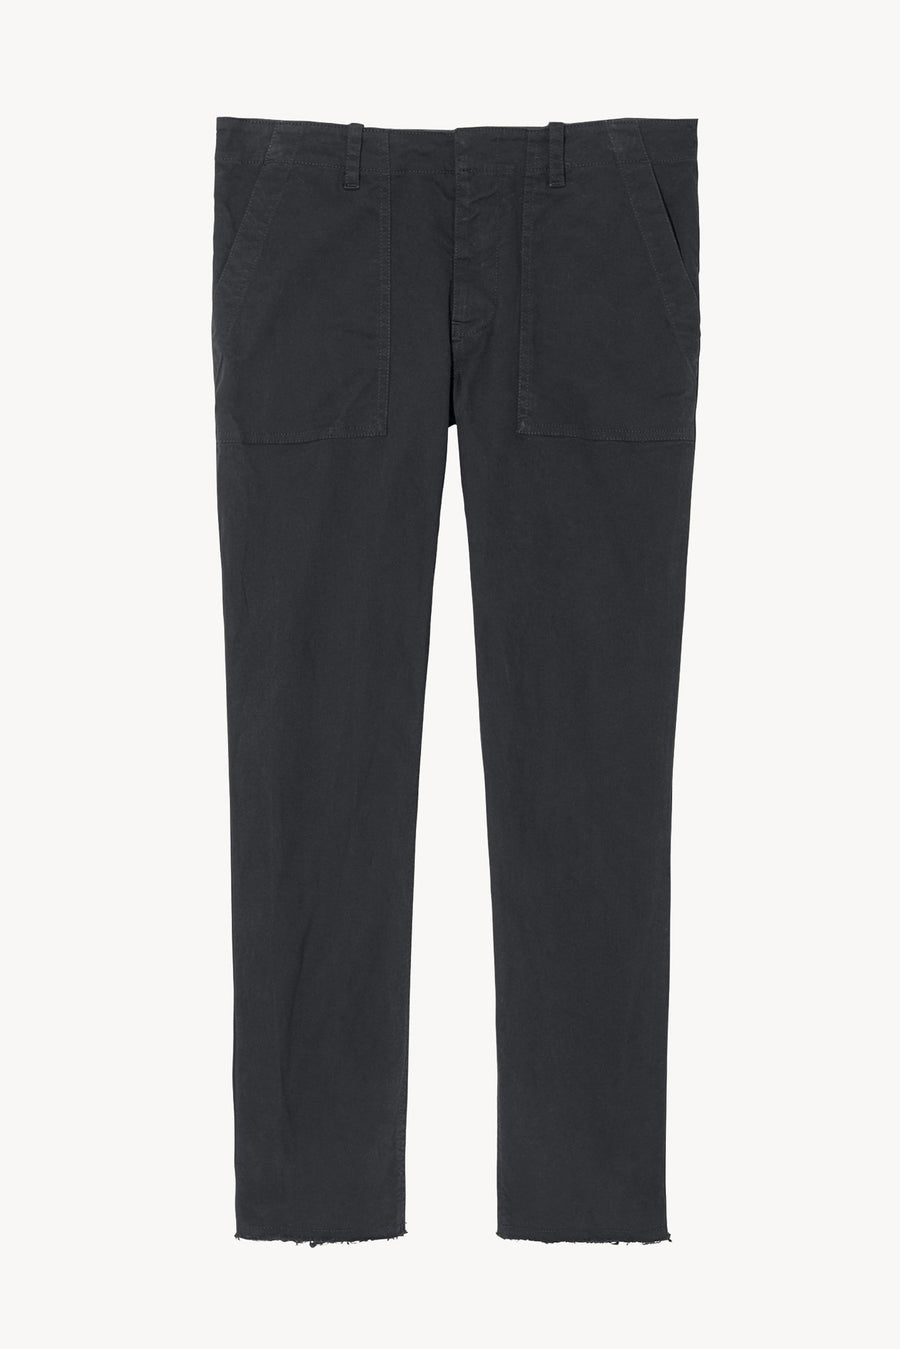 La Sportiva BOLT PANT - Outdoor trousers - carbon/black/black - Zalando